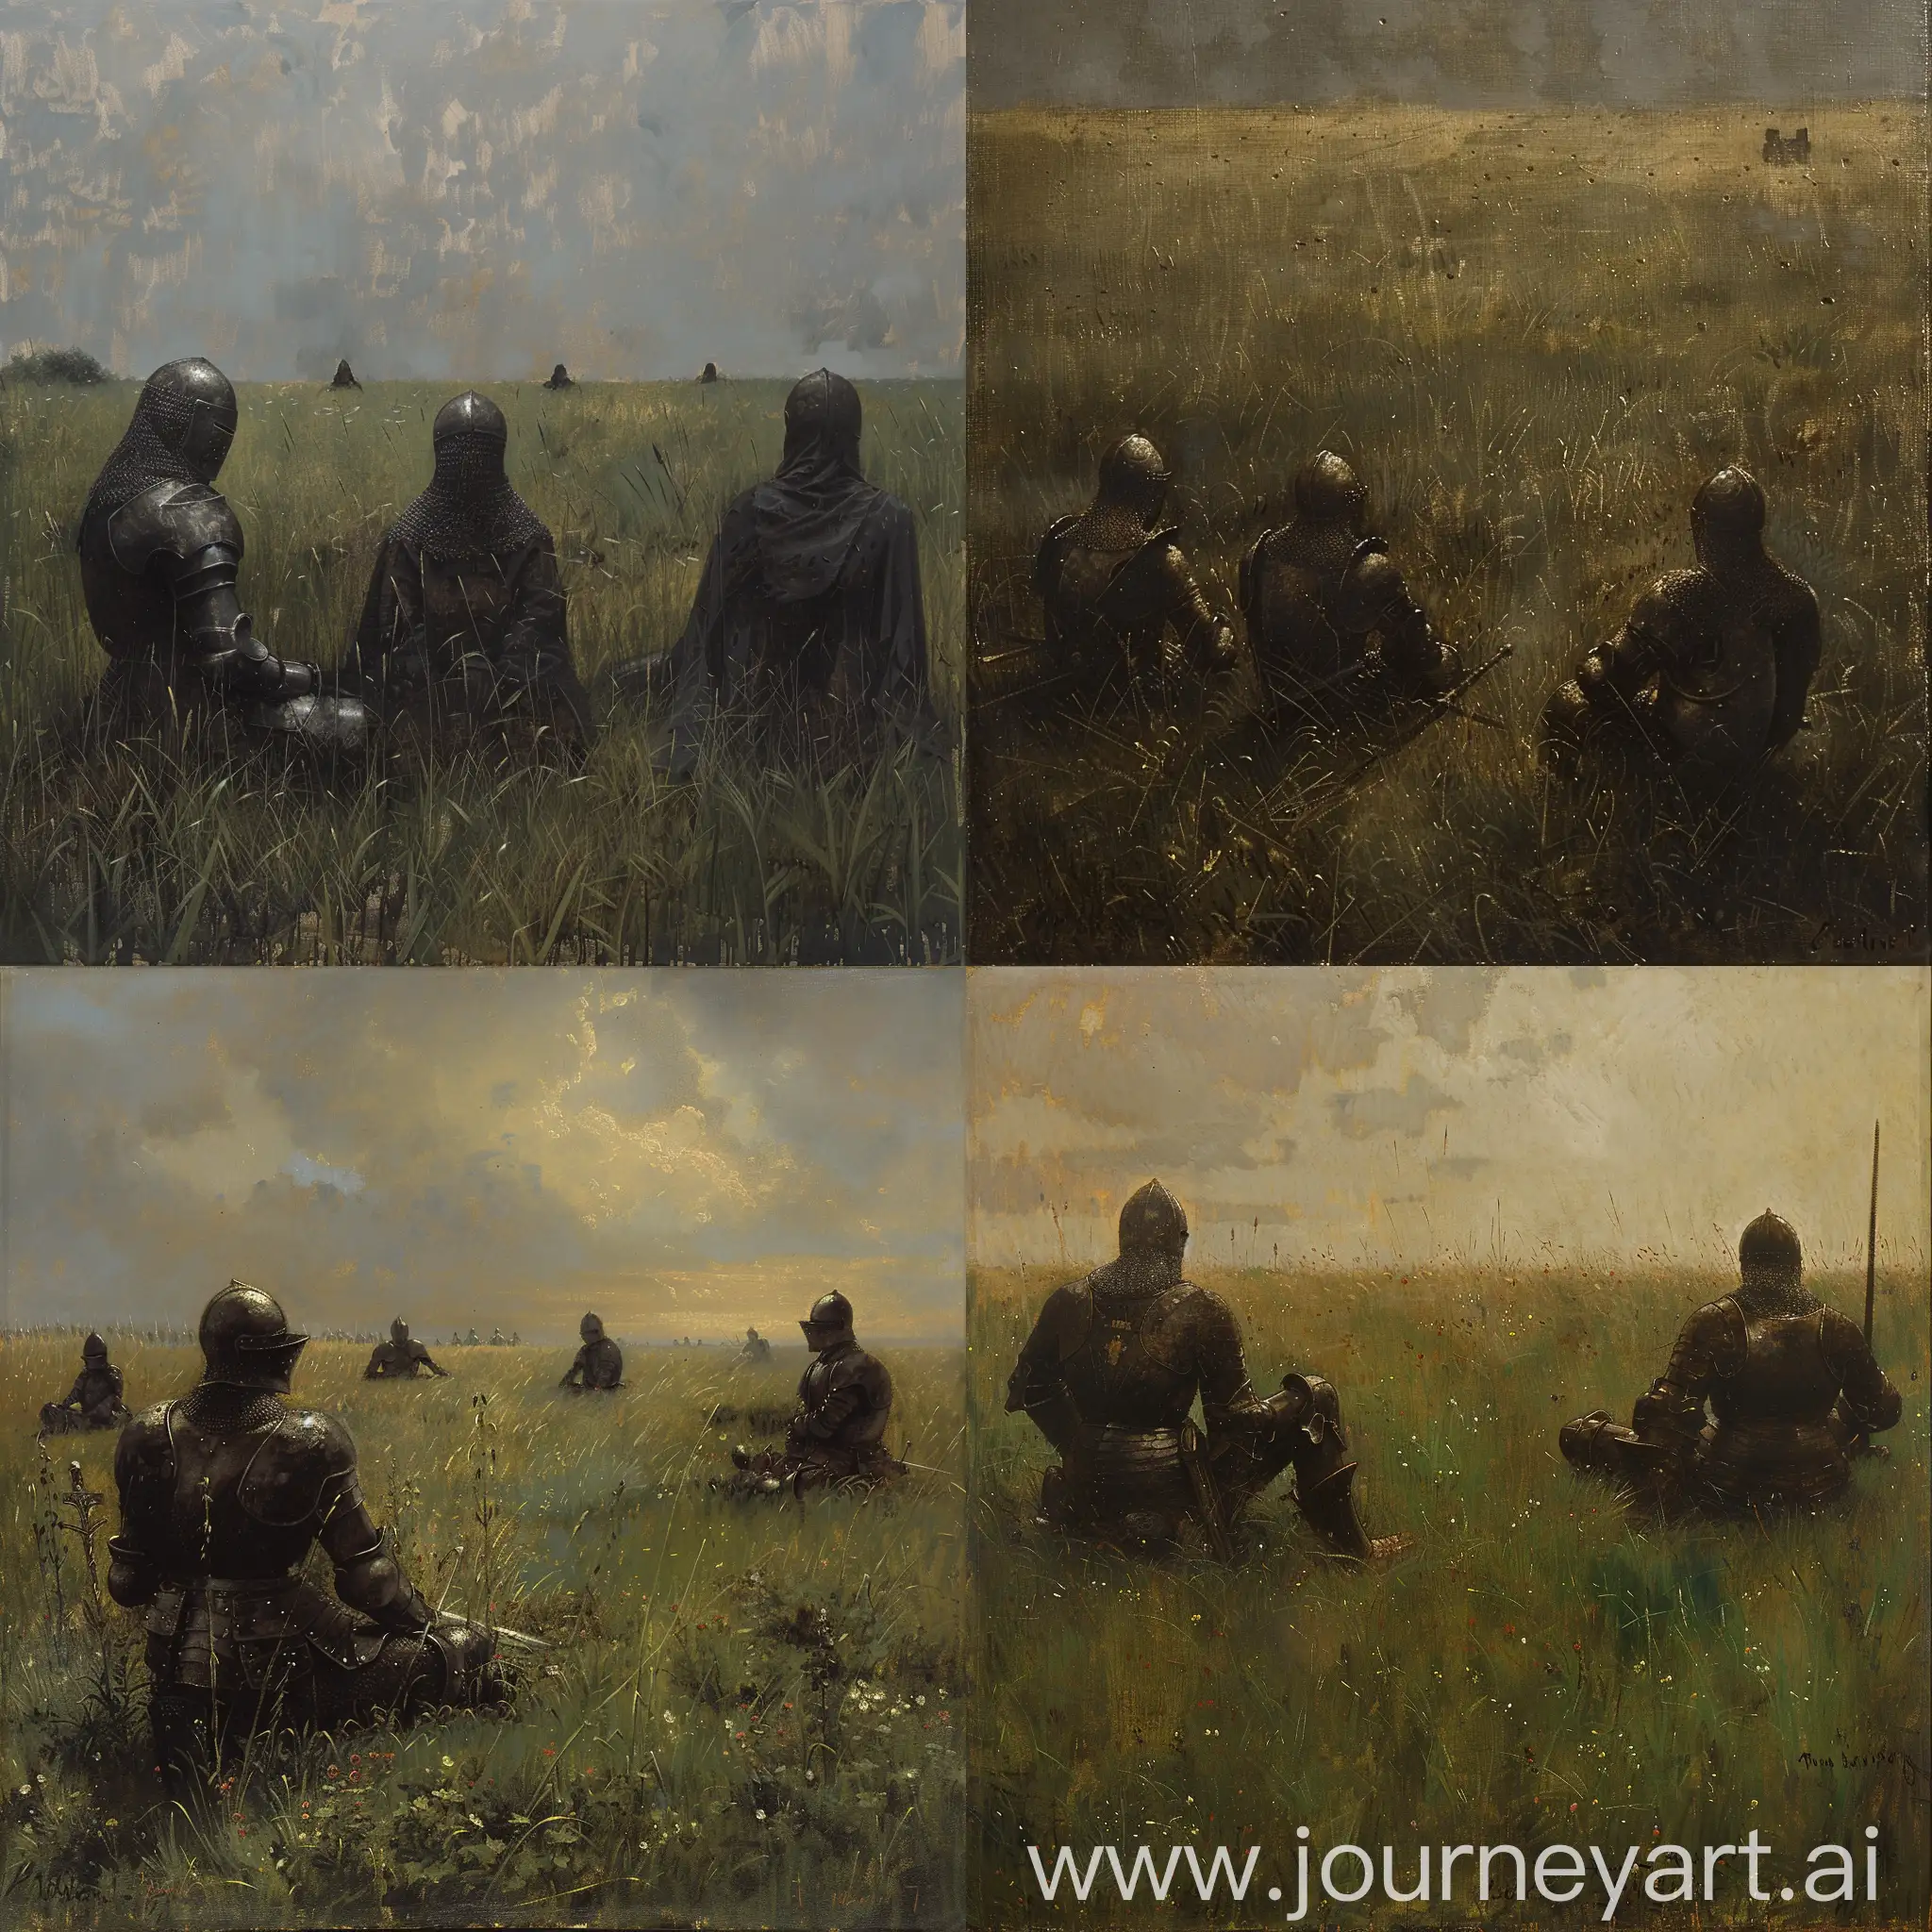 Knights-in-Dark-Armor-Relaxing-in-Vast-Grass-Field